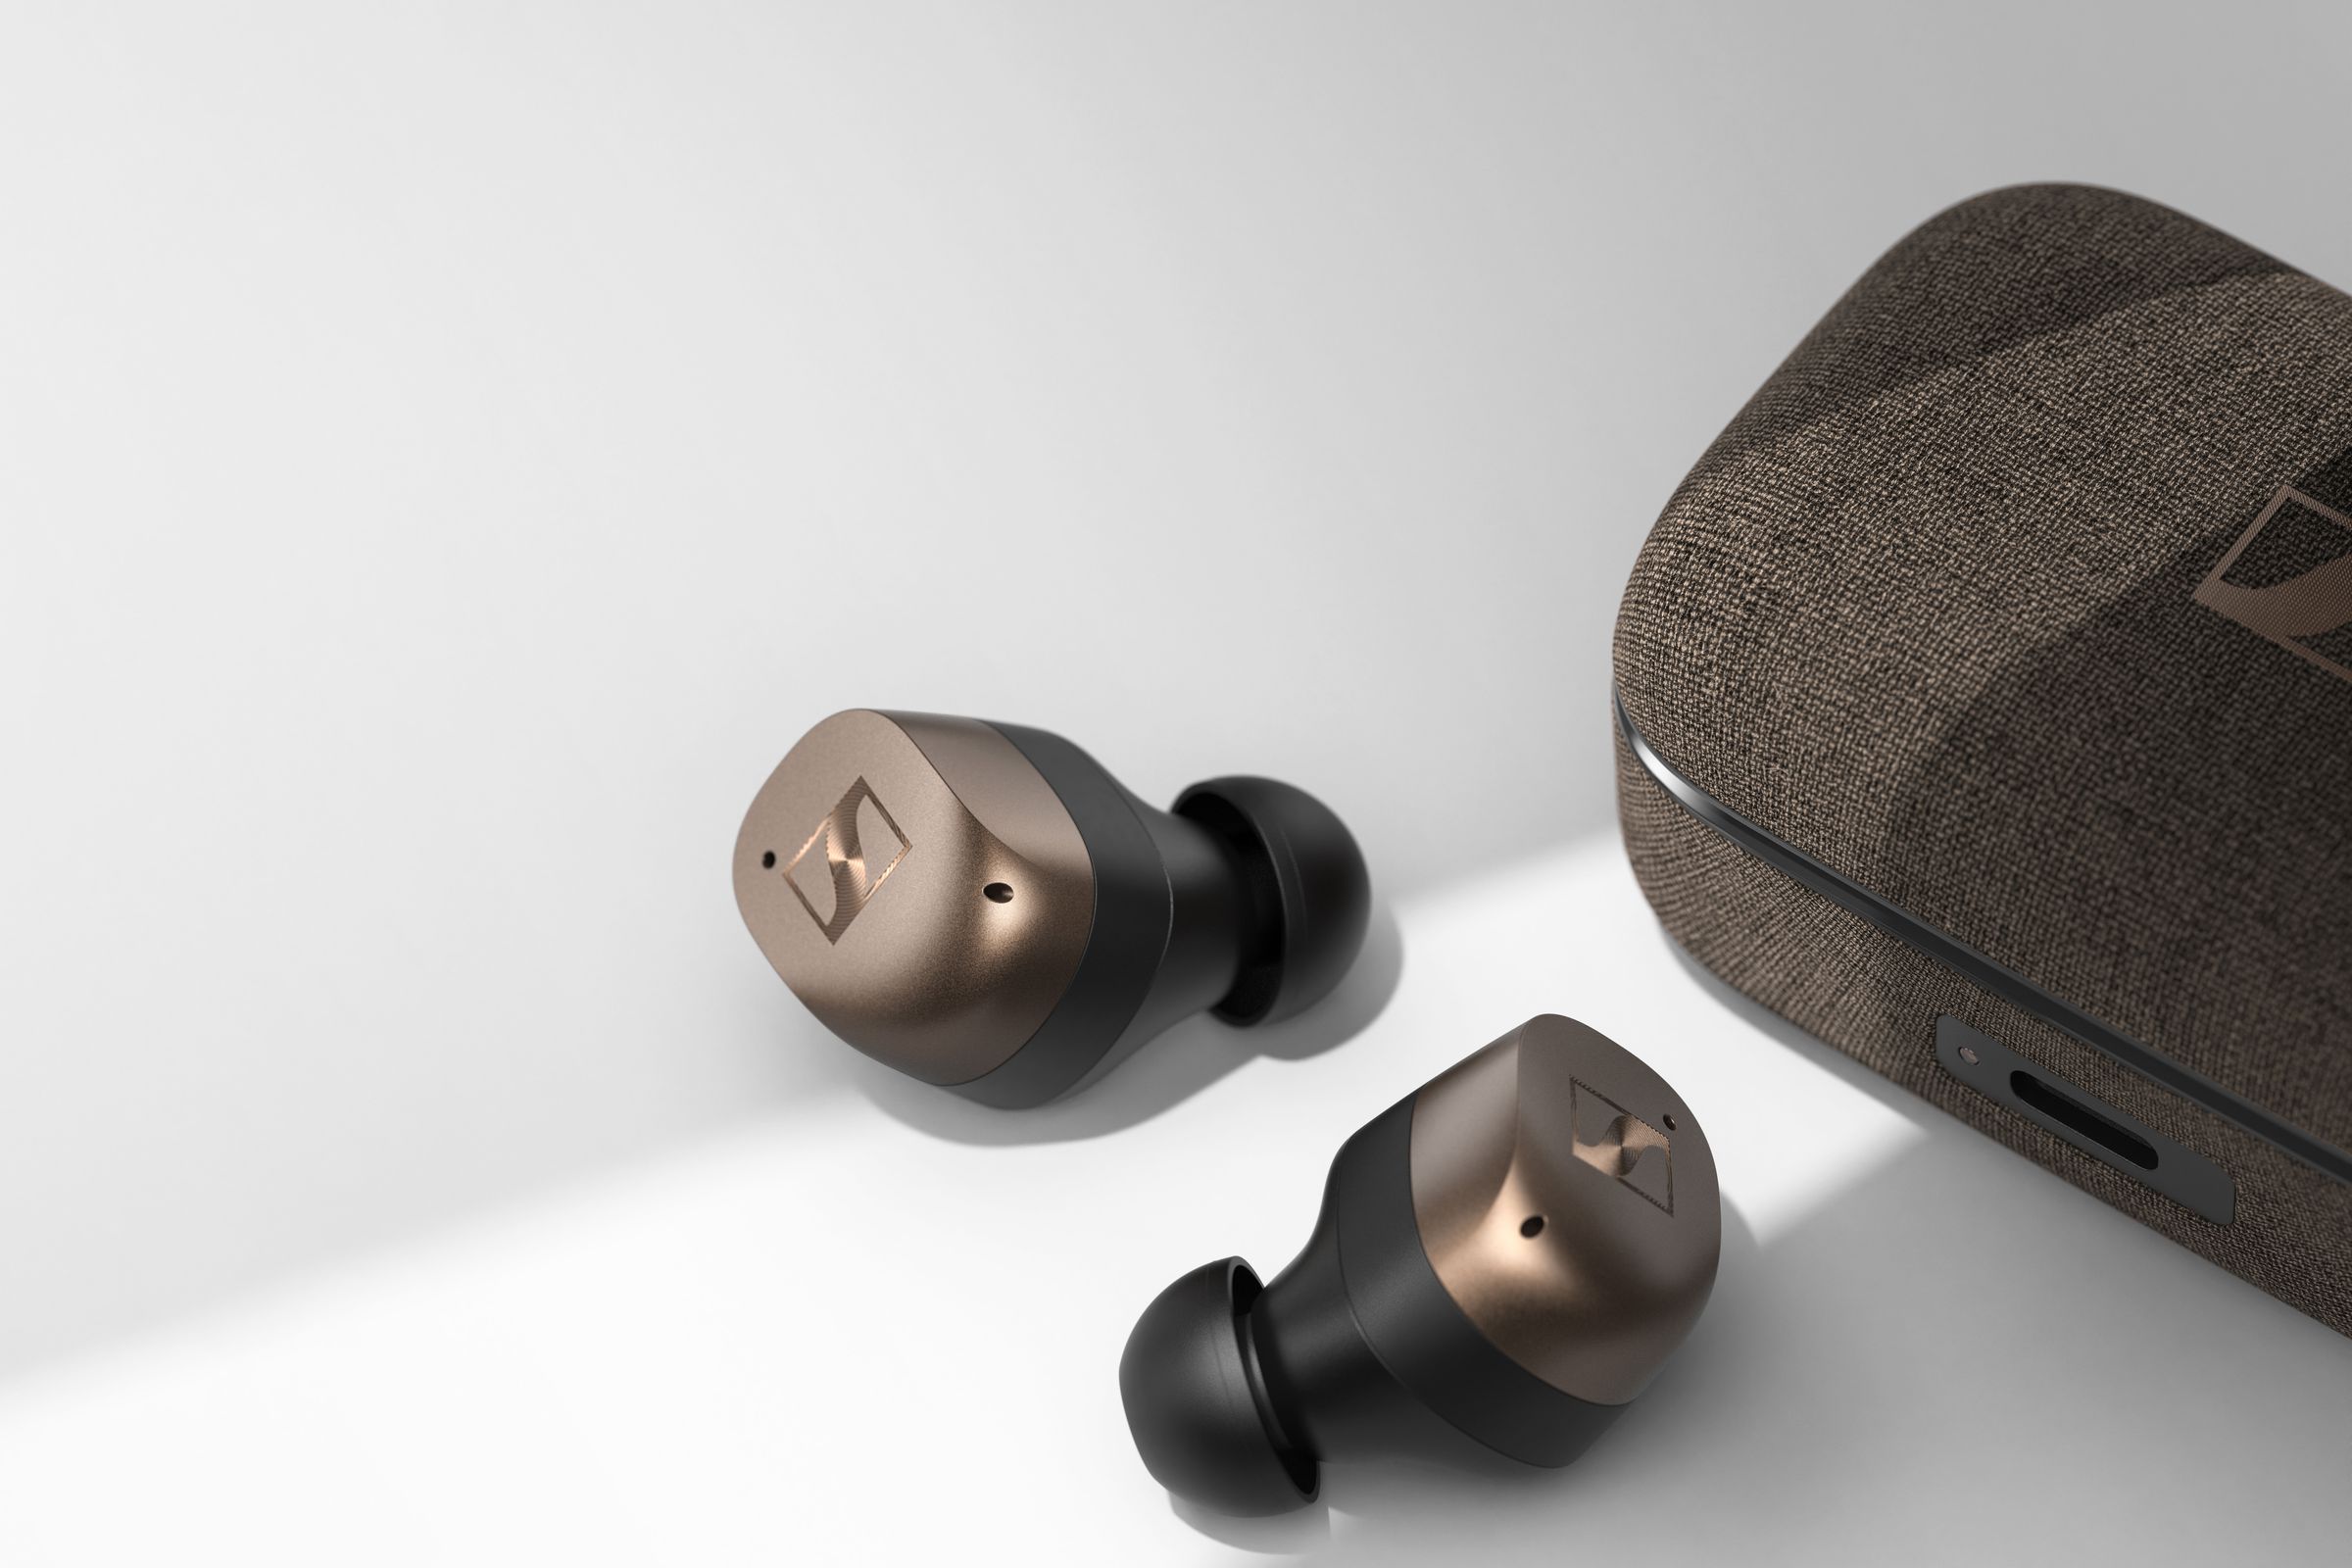 Sennheiser’s Momentum True Wireless 4 earbuds next to their charging case.